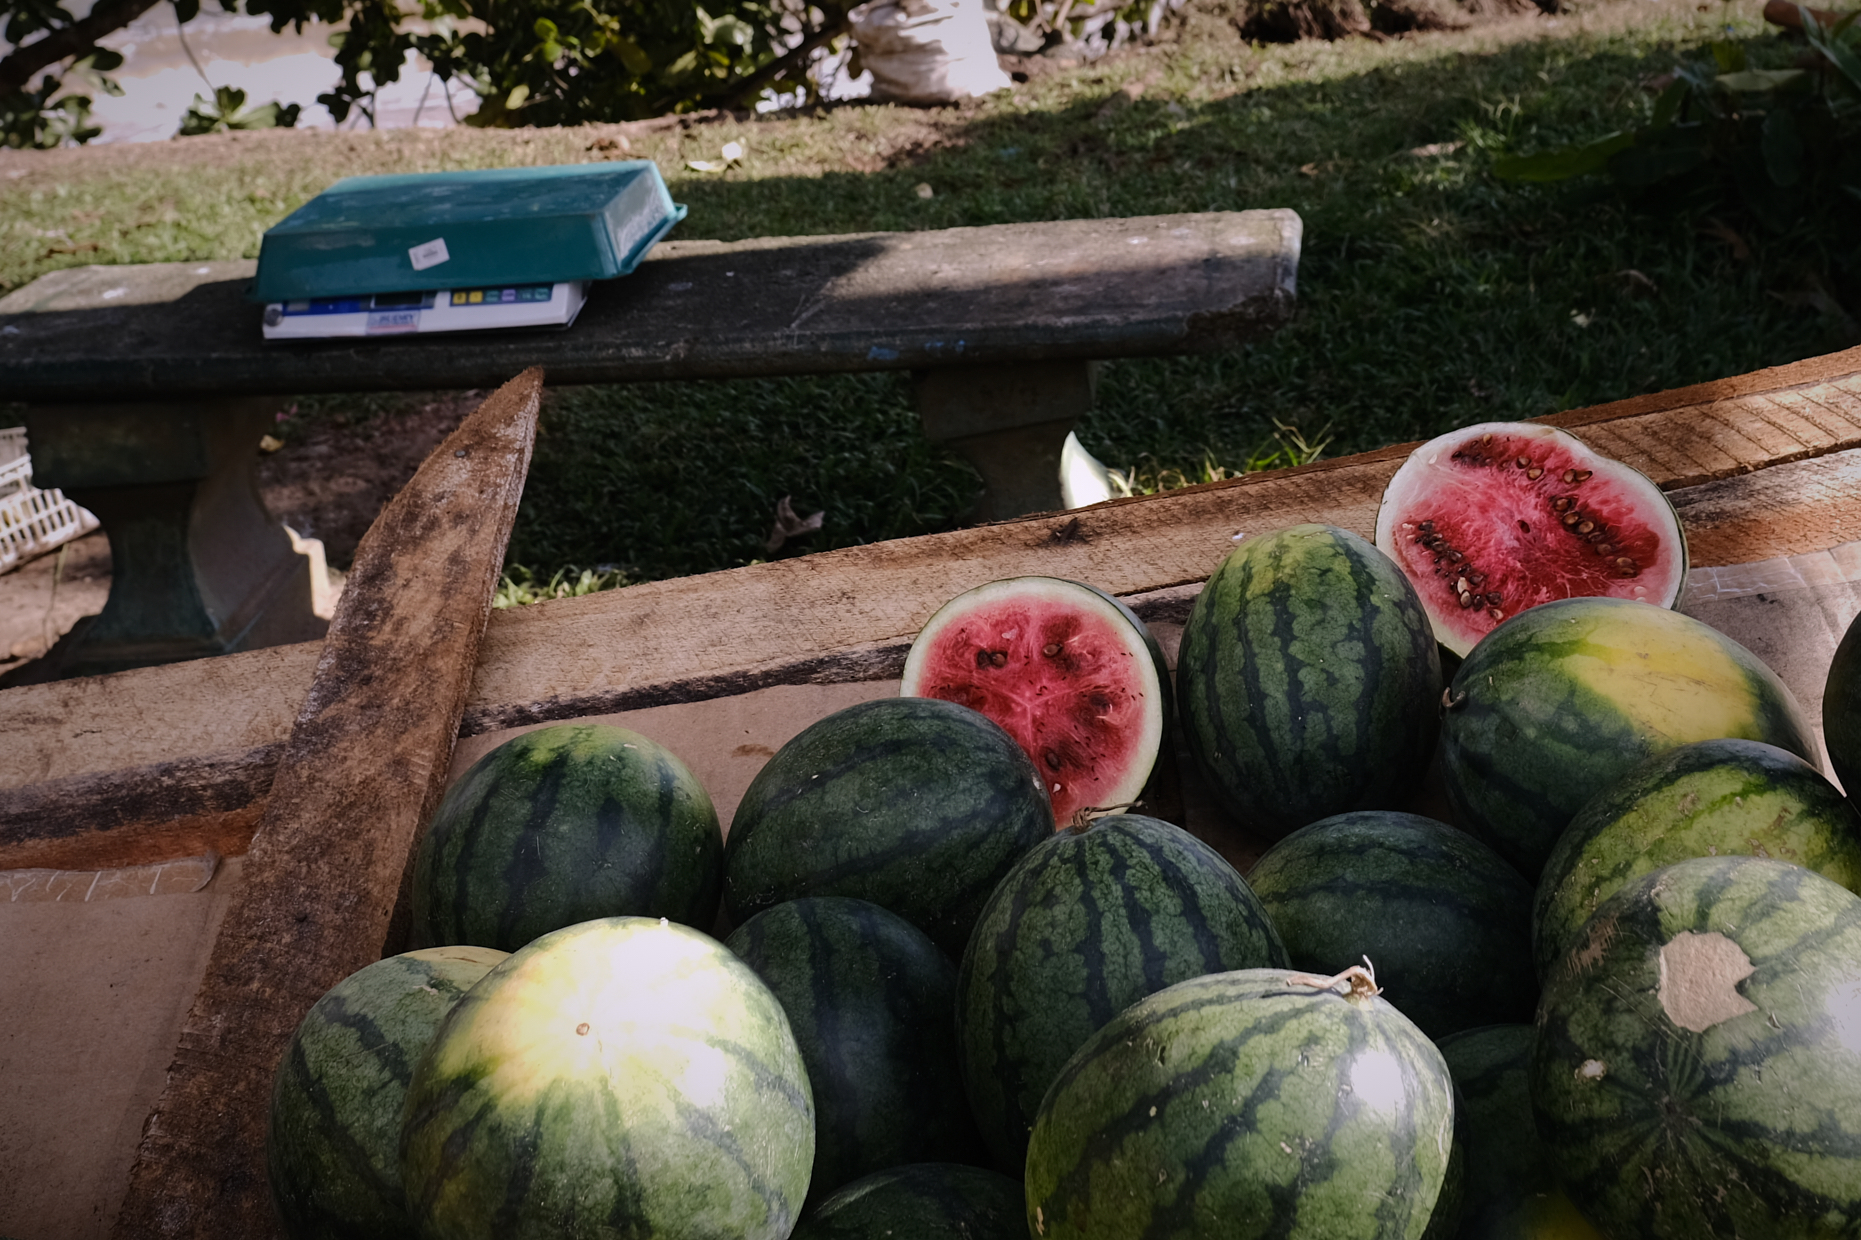 Sri Lanka, Weligama, 2021-10-02. A watermelon rack near the beach. Photograph by Noemie de Bellaigue / Hans Lucas. 
Sri Lanka, Weligama, 2021-10-02. Un etale de pasteques pres de la plage. Photographie par Noemie de Bellaigue / Hans Lucas.